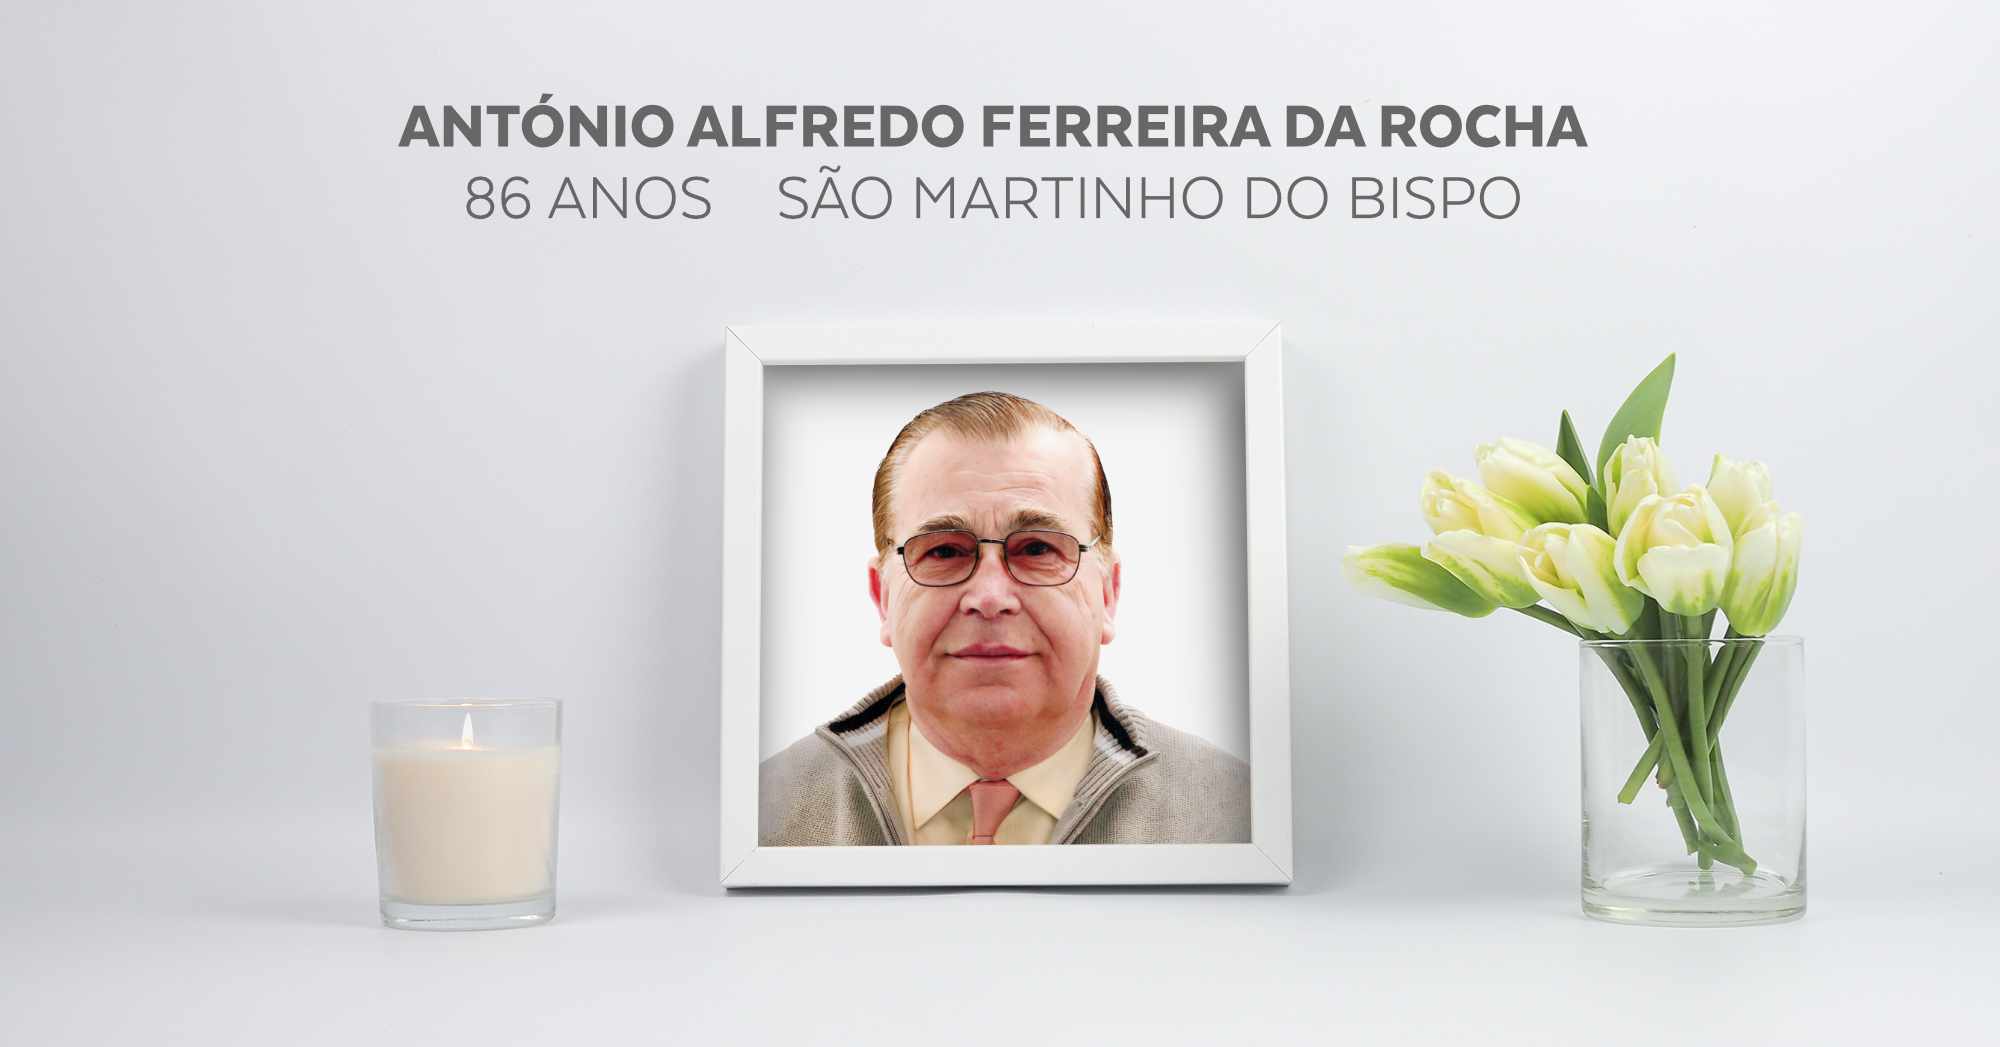 António Alfredo Ferreira da Rocha